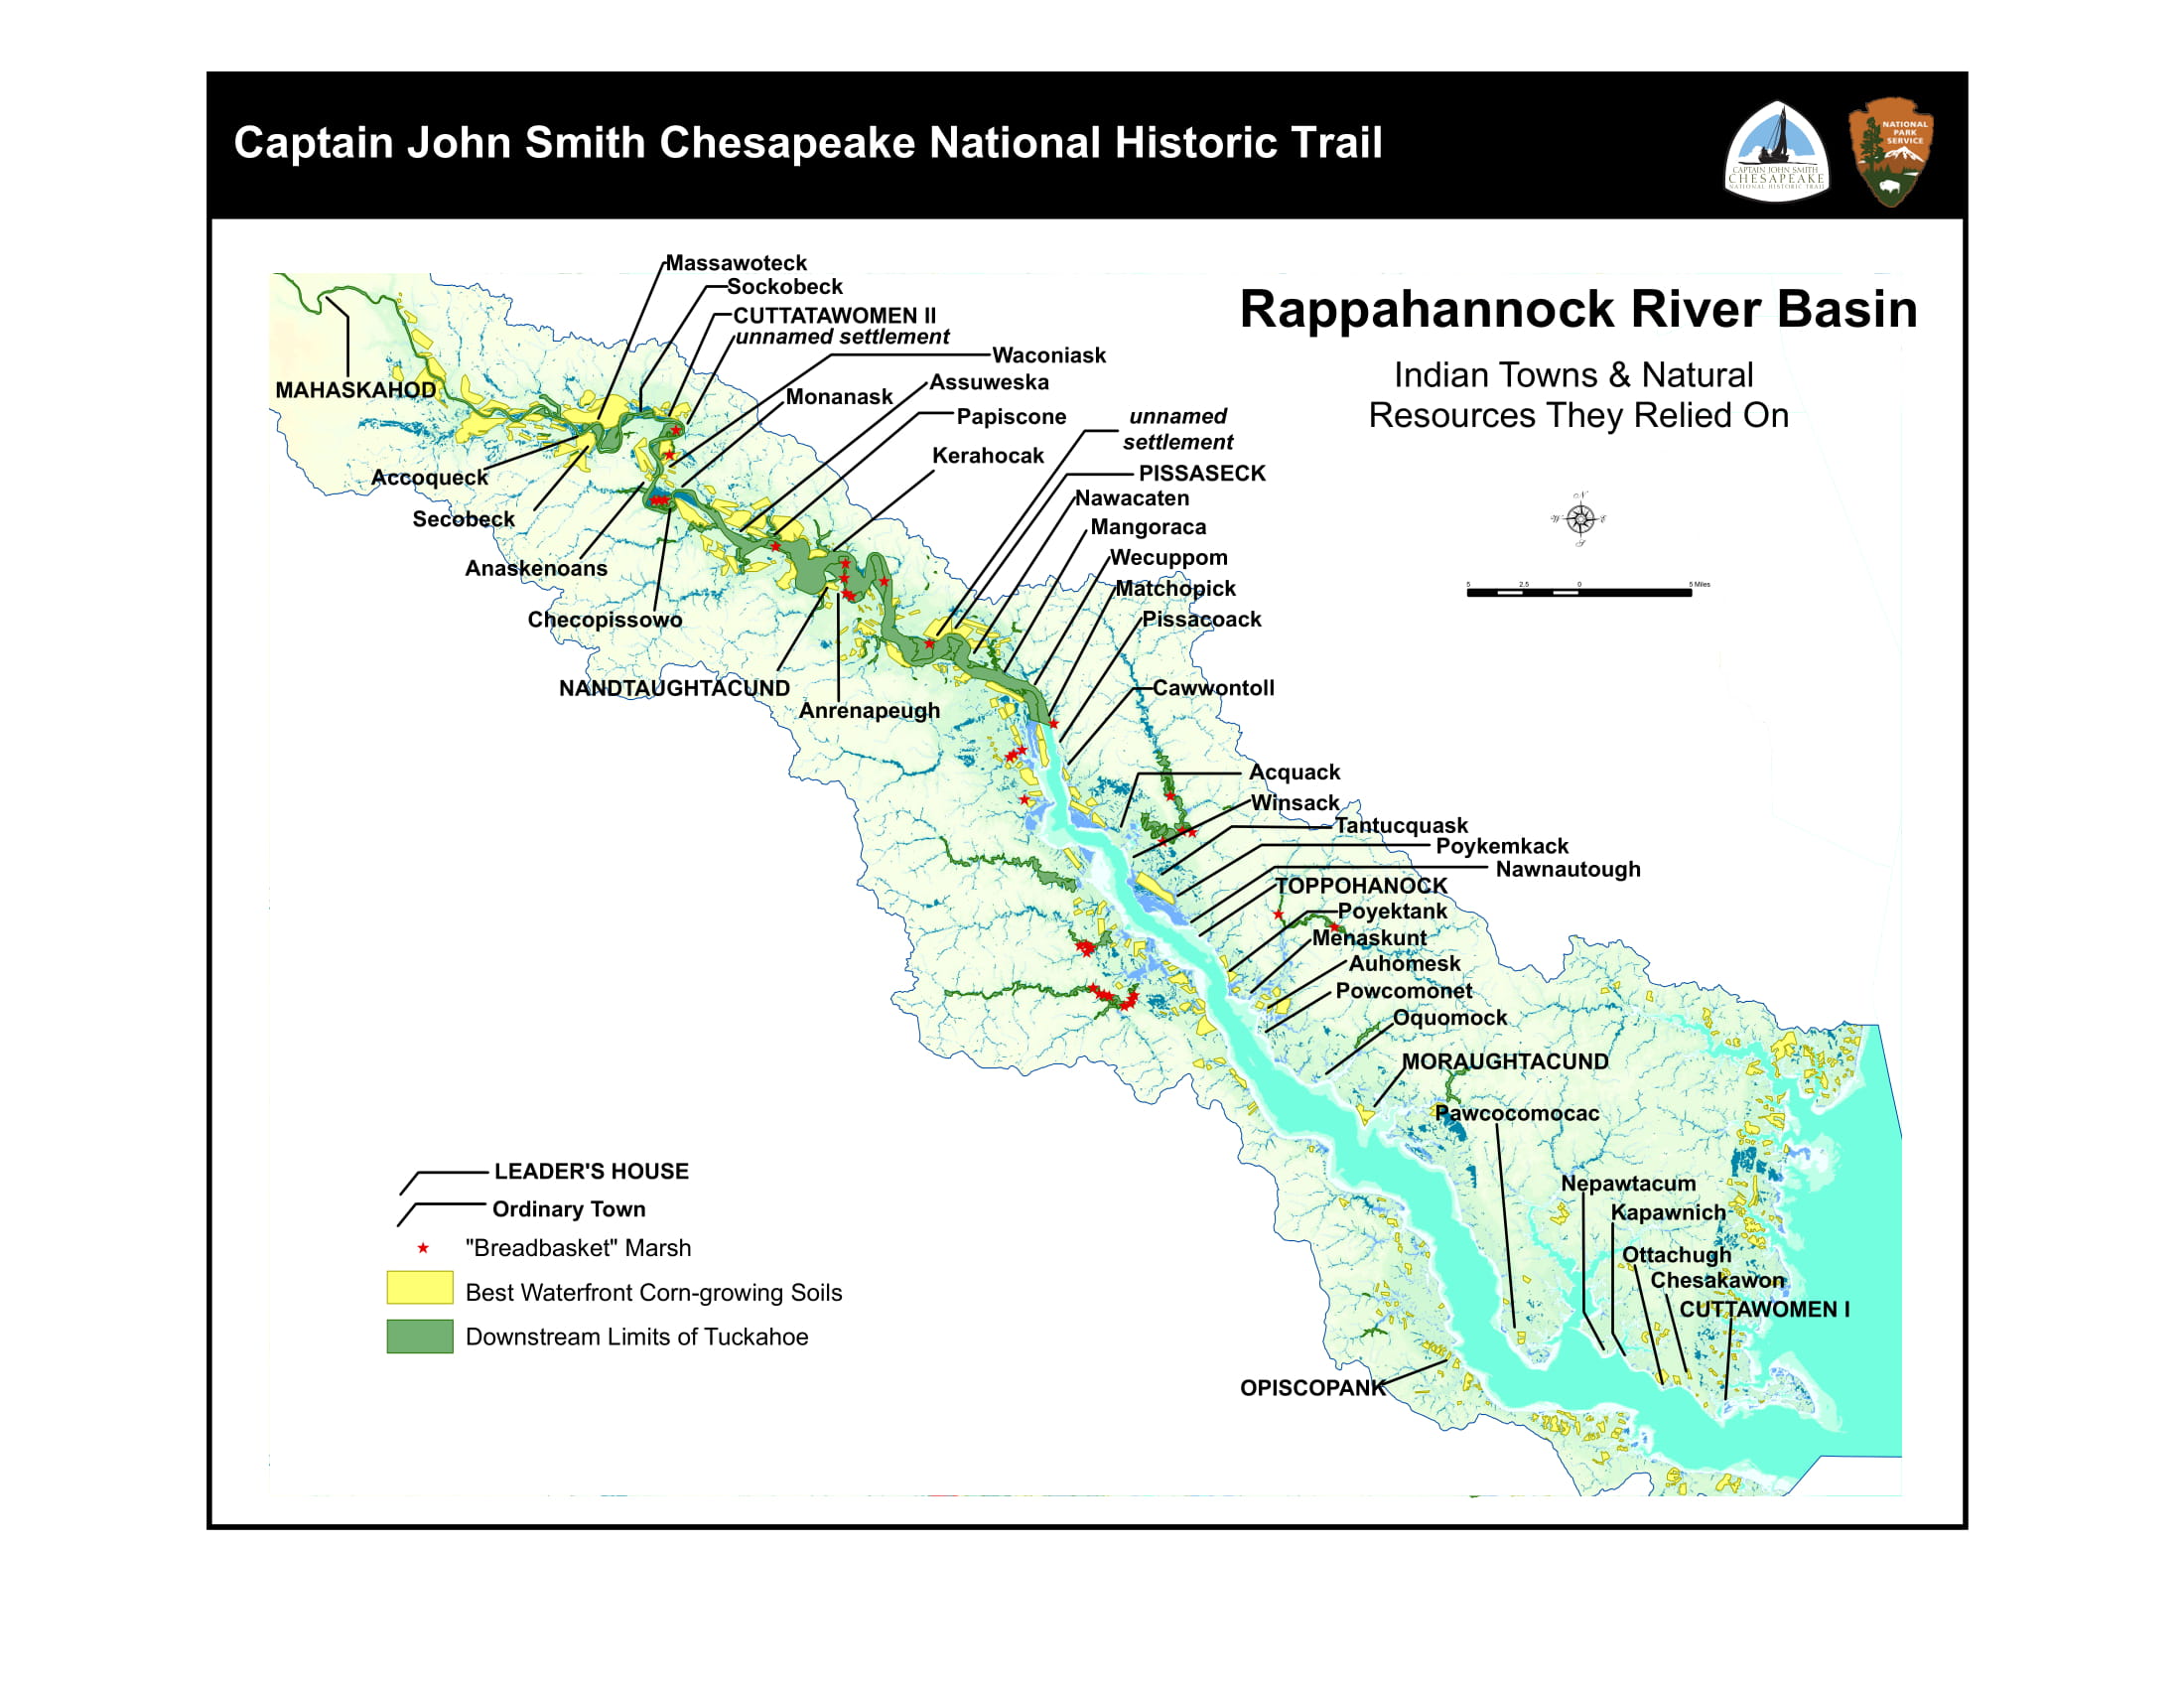 Rappahannock River Tide Chart